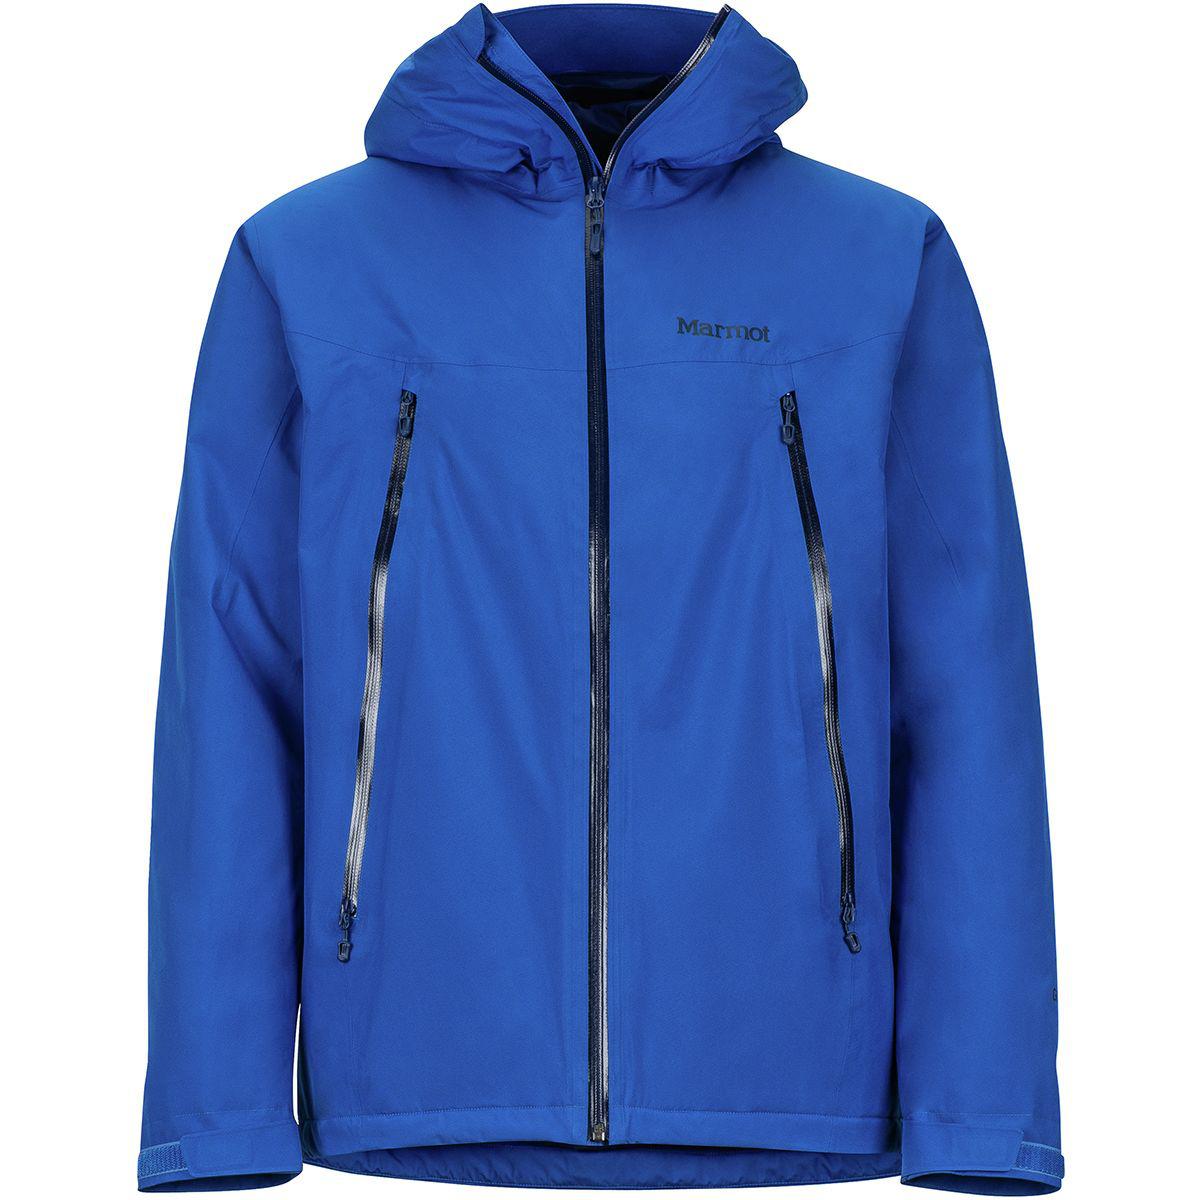 Marmot Synthetic Solaris Jacket in Dark Cerulean (Blue) for Men - Lyst